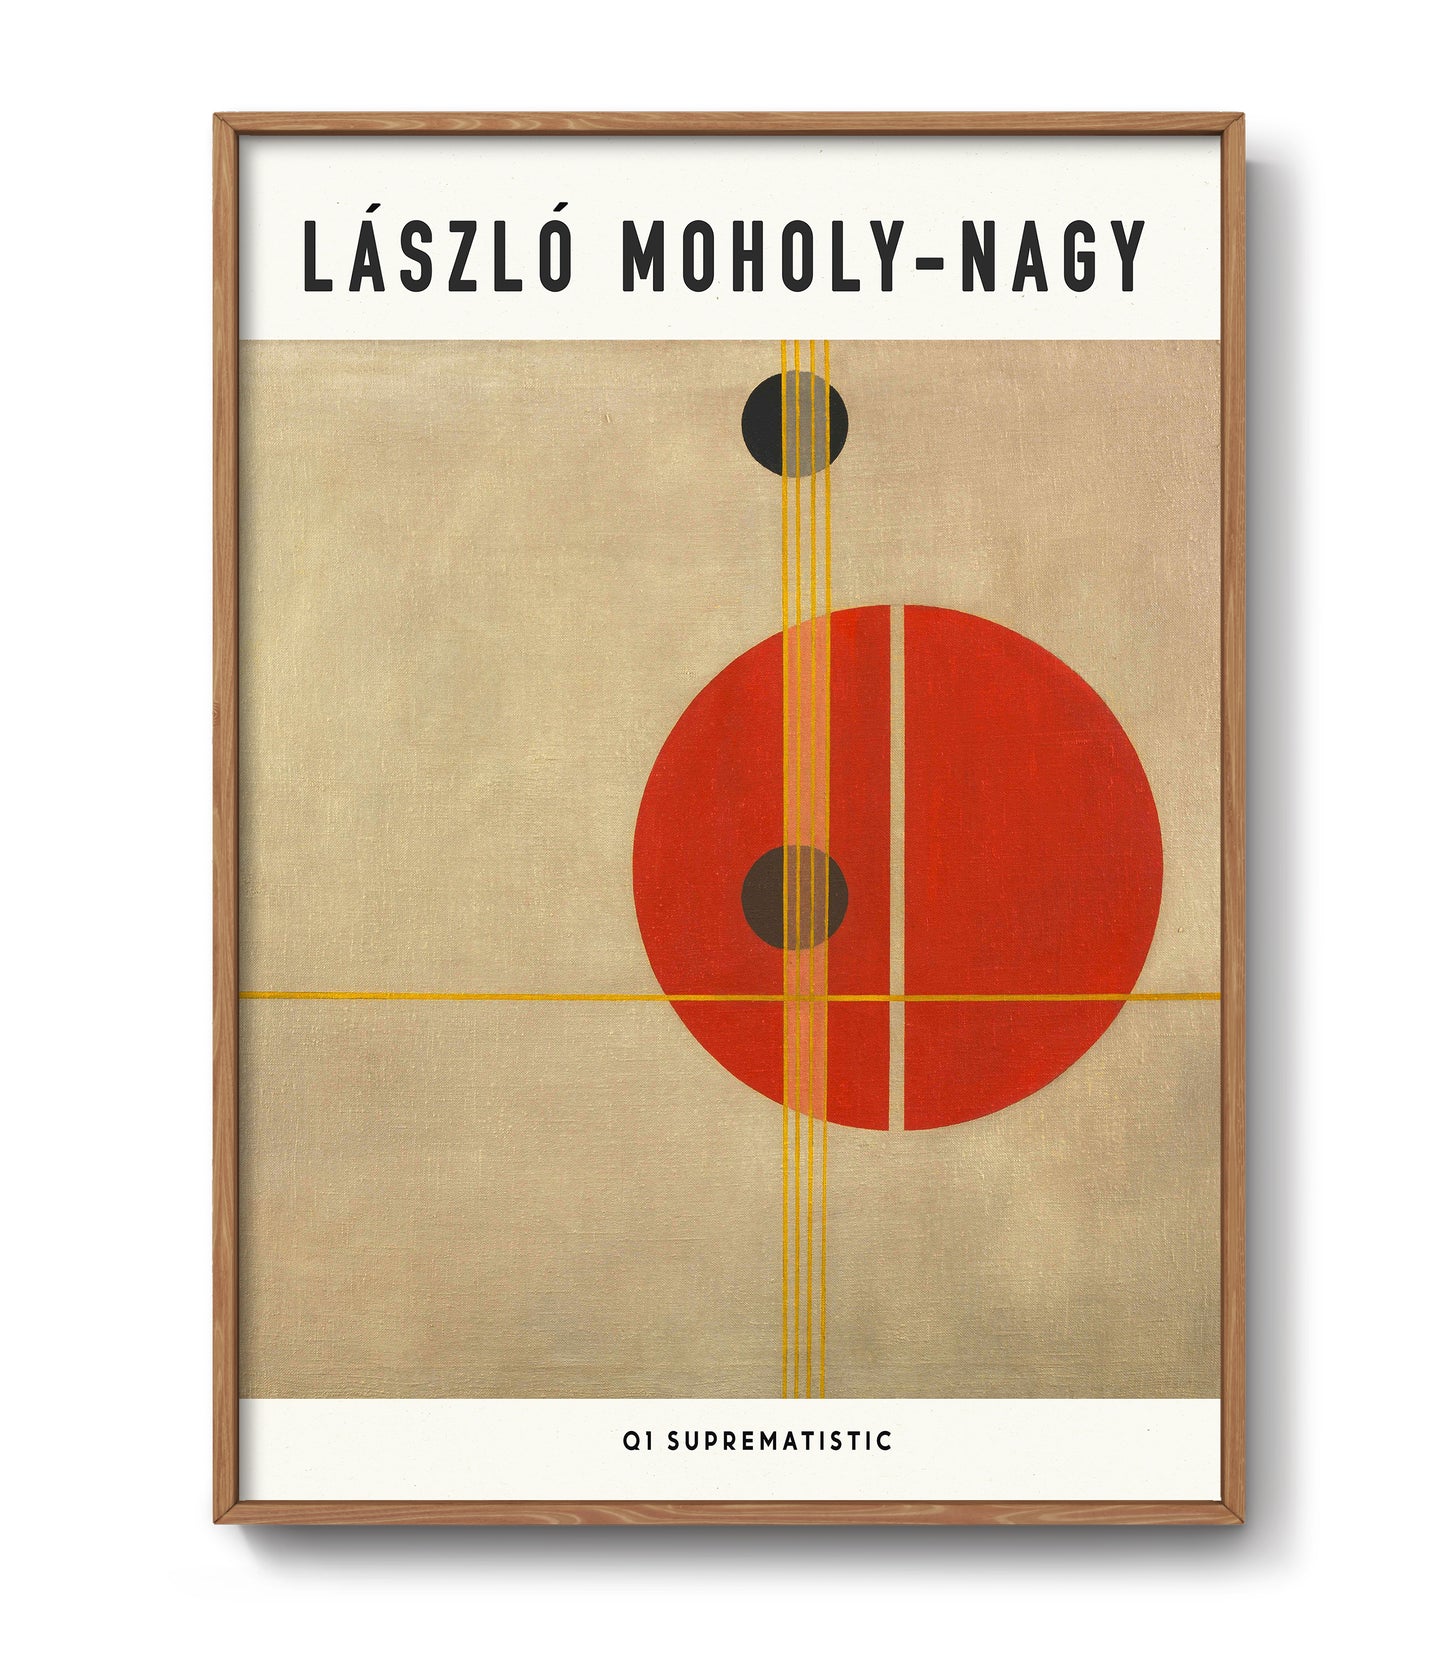 Q1 Suprematistic by László Moholy-Nagy